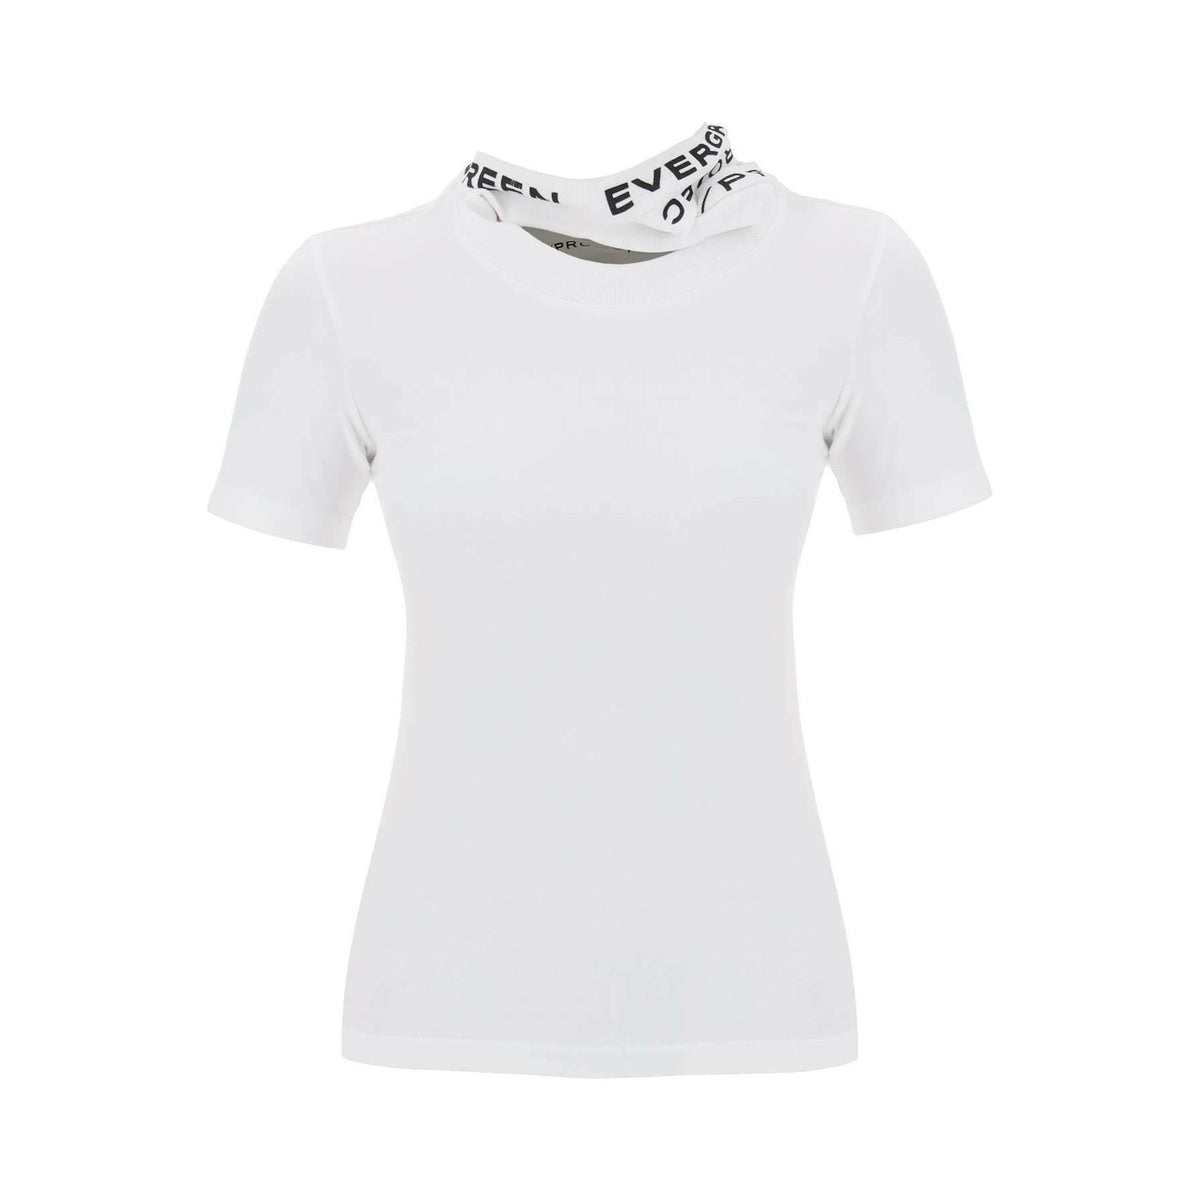 Y PROJECT - White Organic Cotton Triple Collar T-Shirt - JOHN JULIA